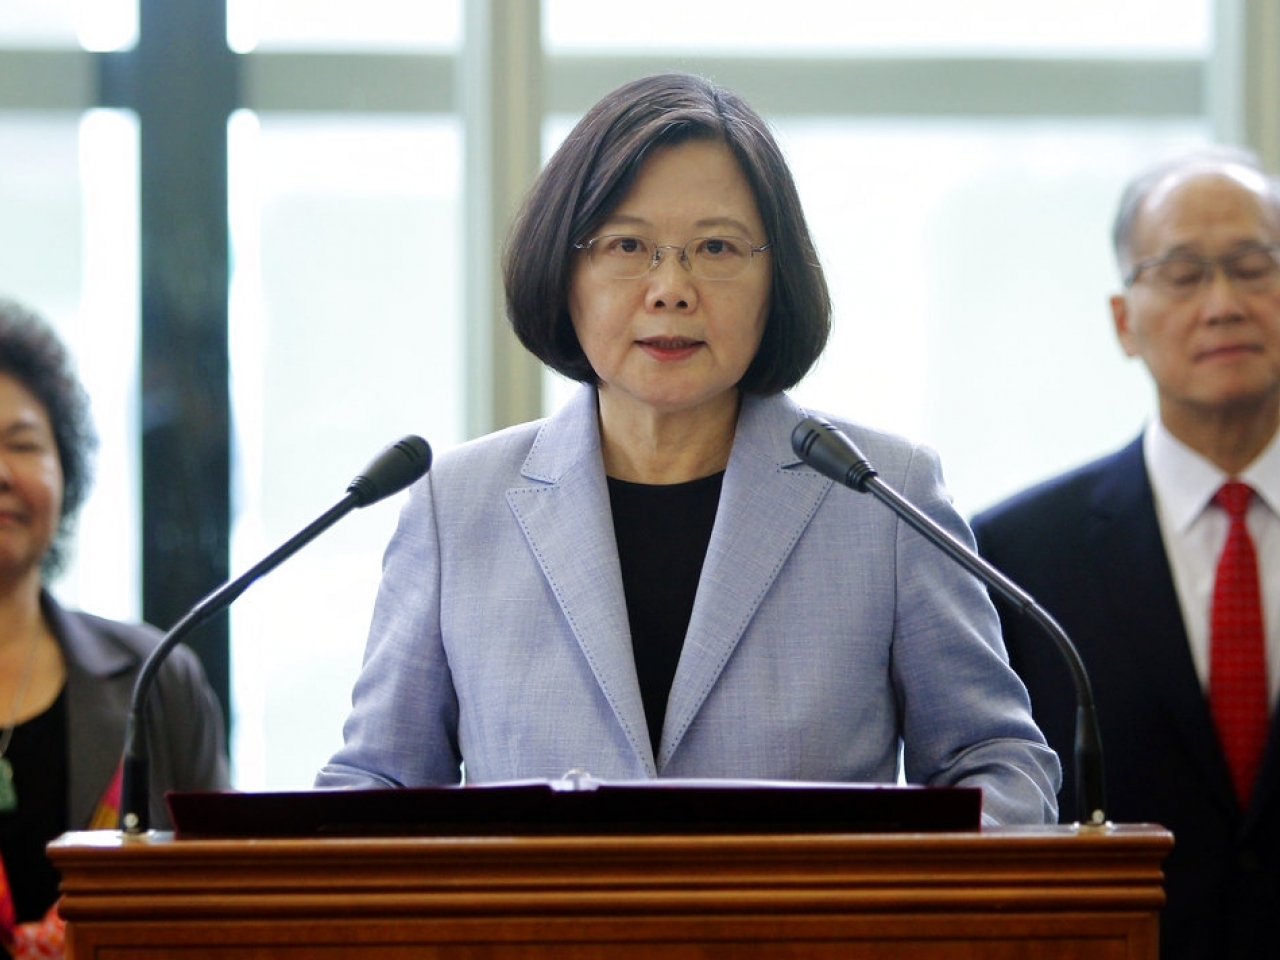 Presidenta de Taiwán da un discurso en EEUU y enfurece a Pekín